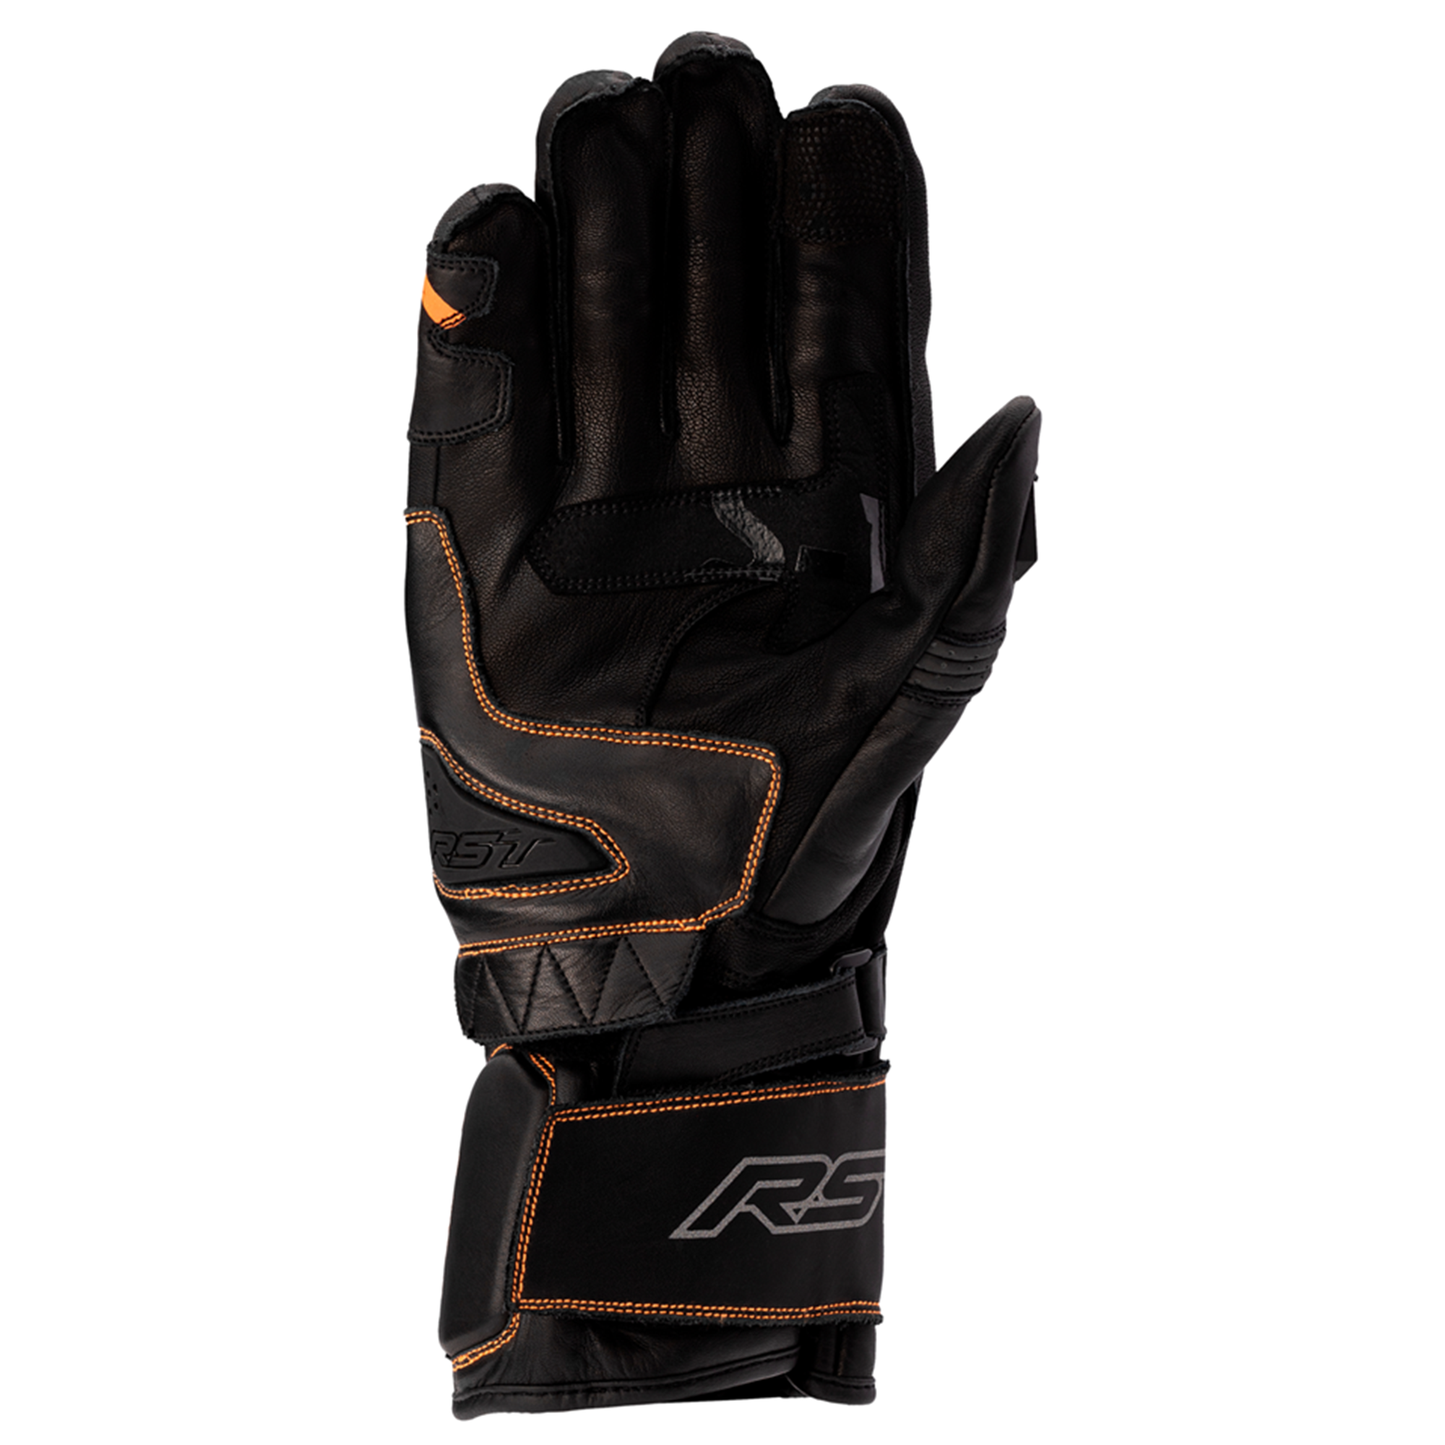 RST S1 CE Men's Gloves - Black/Grey/Neon Orange (3033)